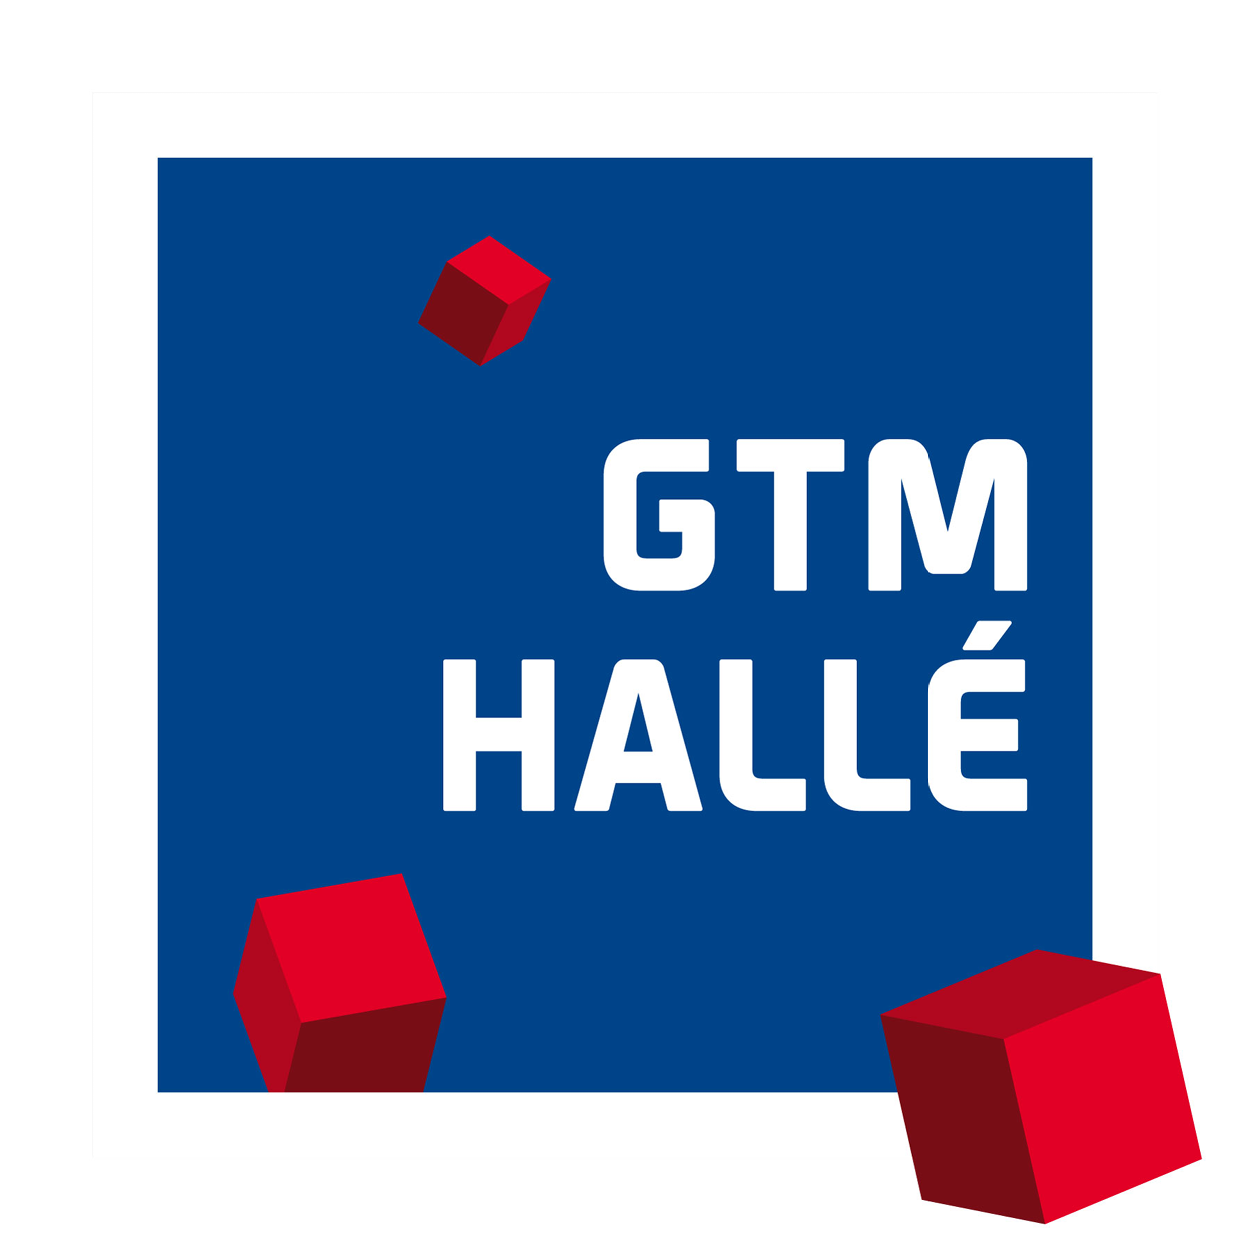 GTM HALLE